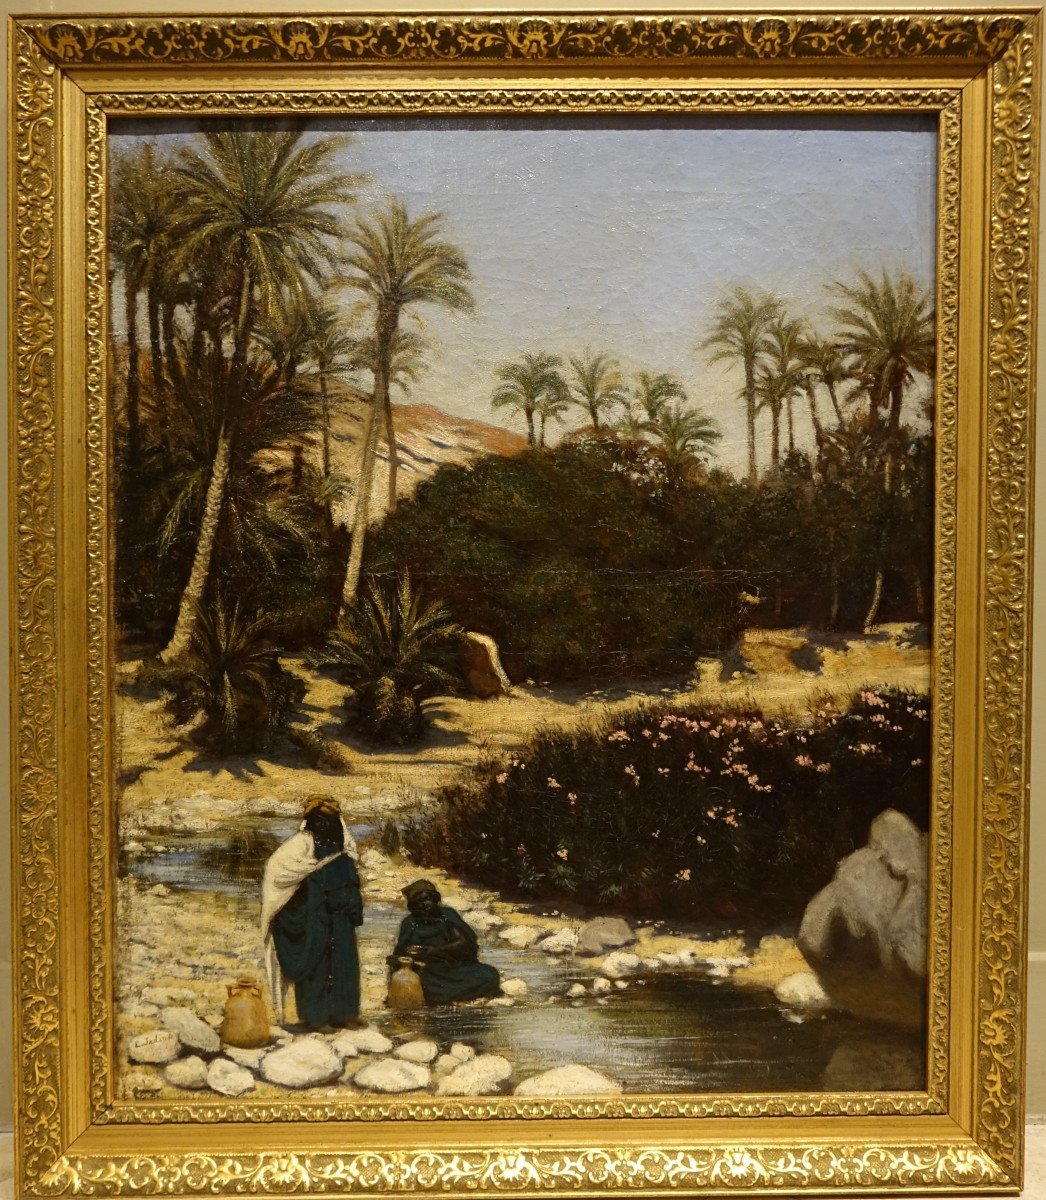 Two Bedouin Women On The Edge Of A Wadi, Emmanuel Jadin, 1843-1922